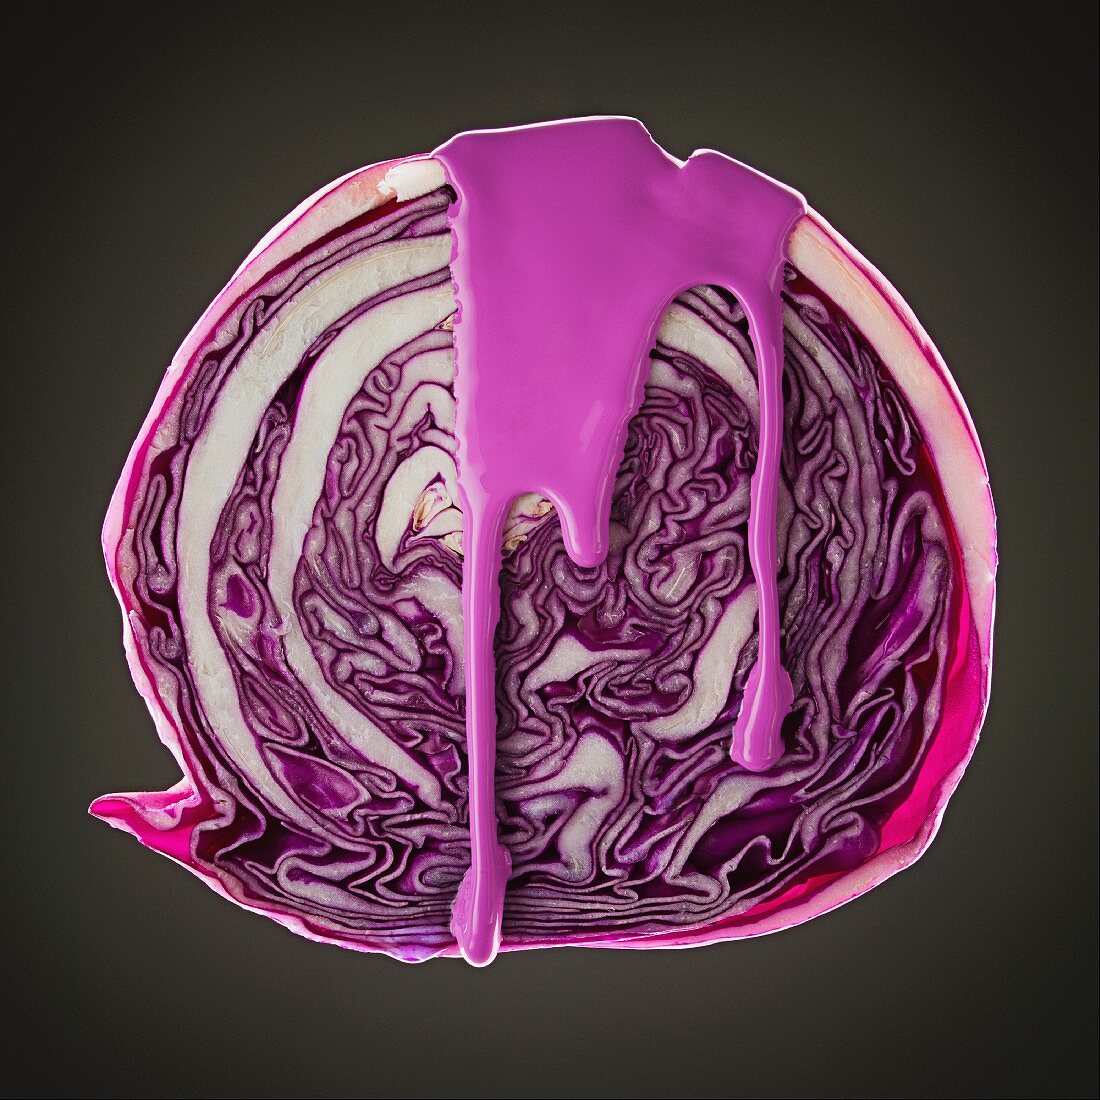 Rotkohl mit tropfender lila Farbe